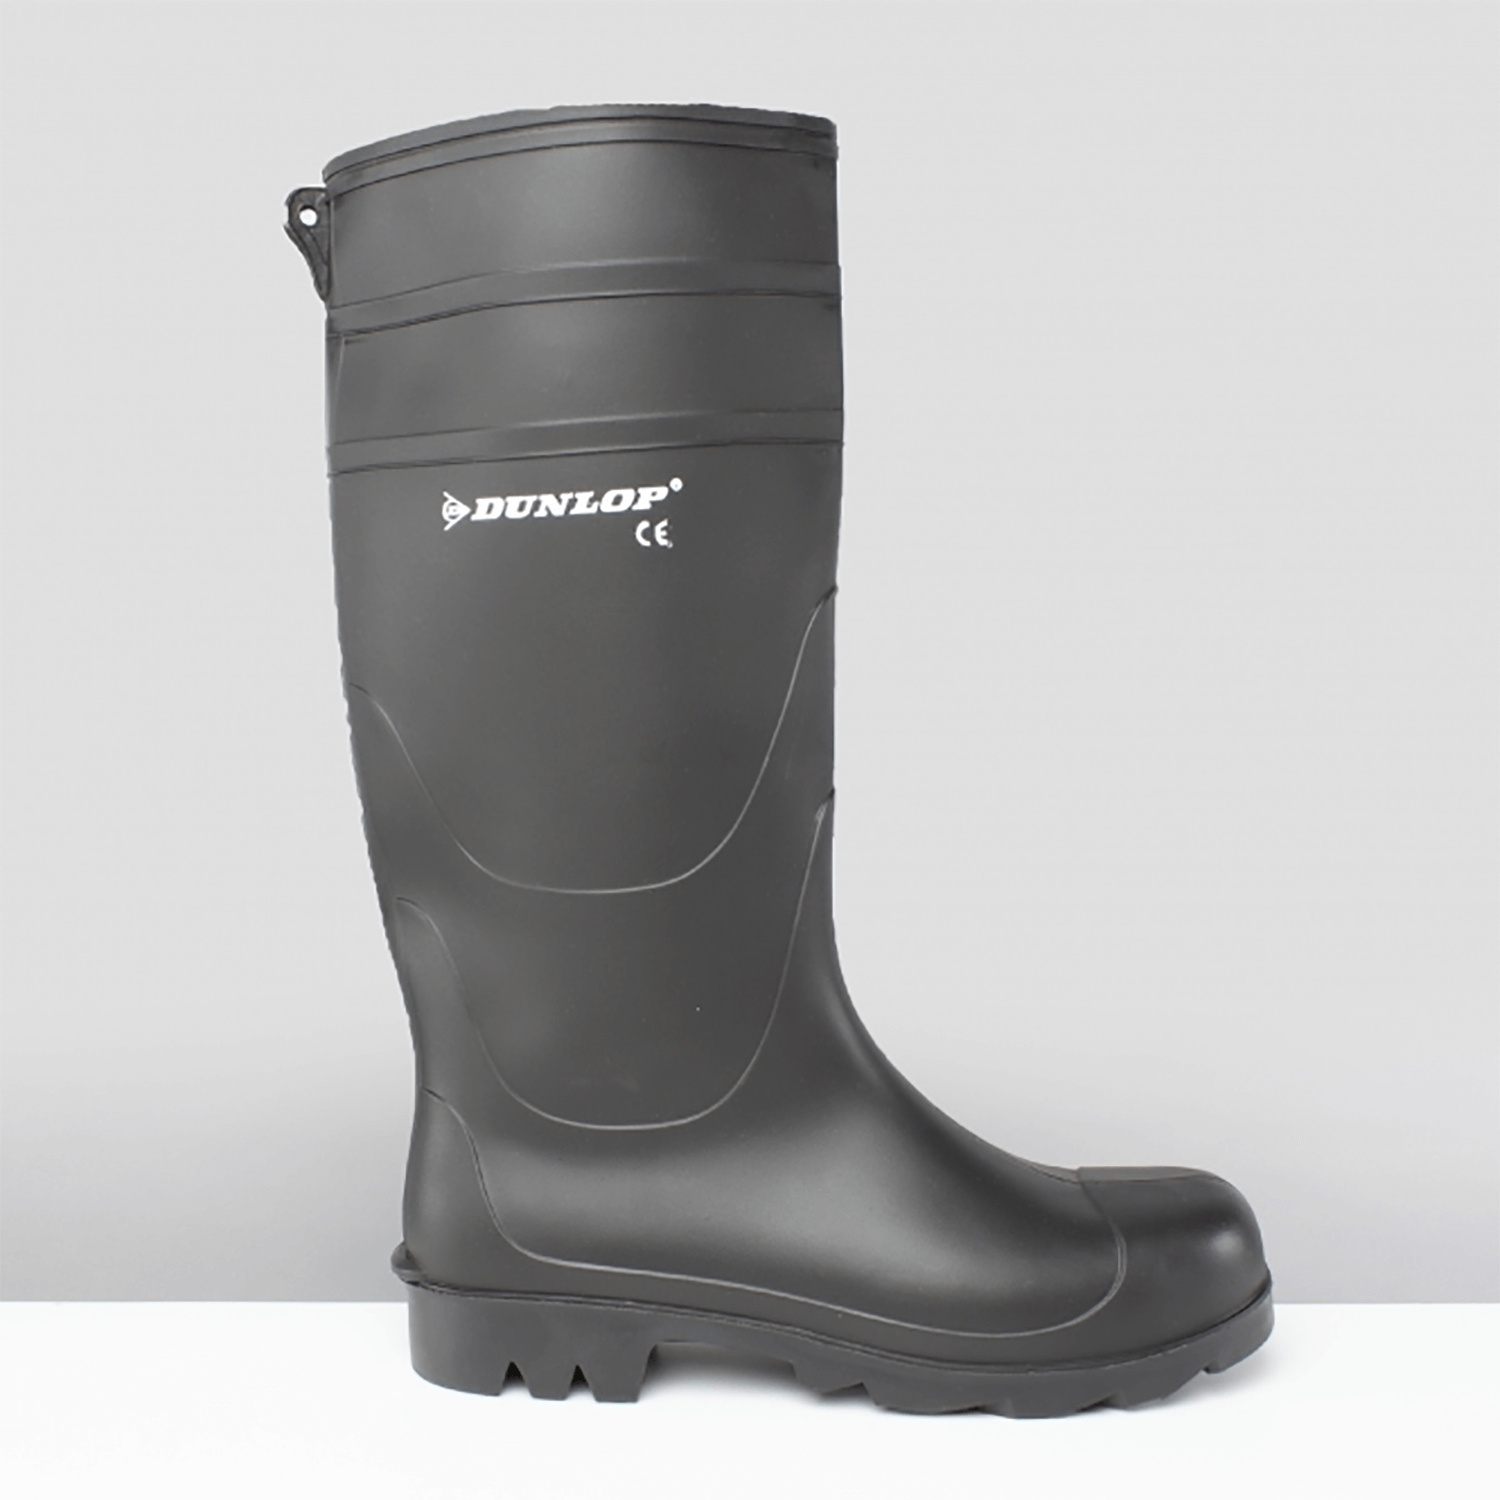 Dunlop Universal Wellington Boot in Black - £24.99 | Garden4Less UK Shop